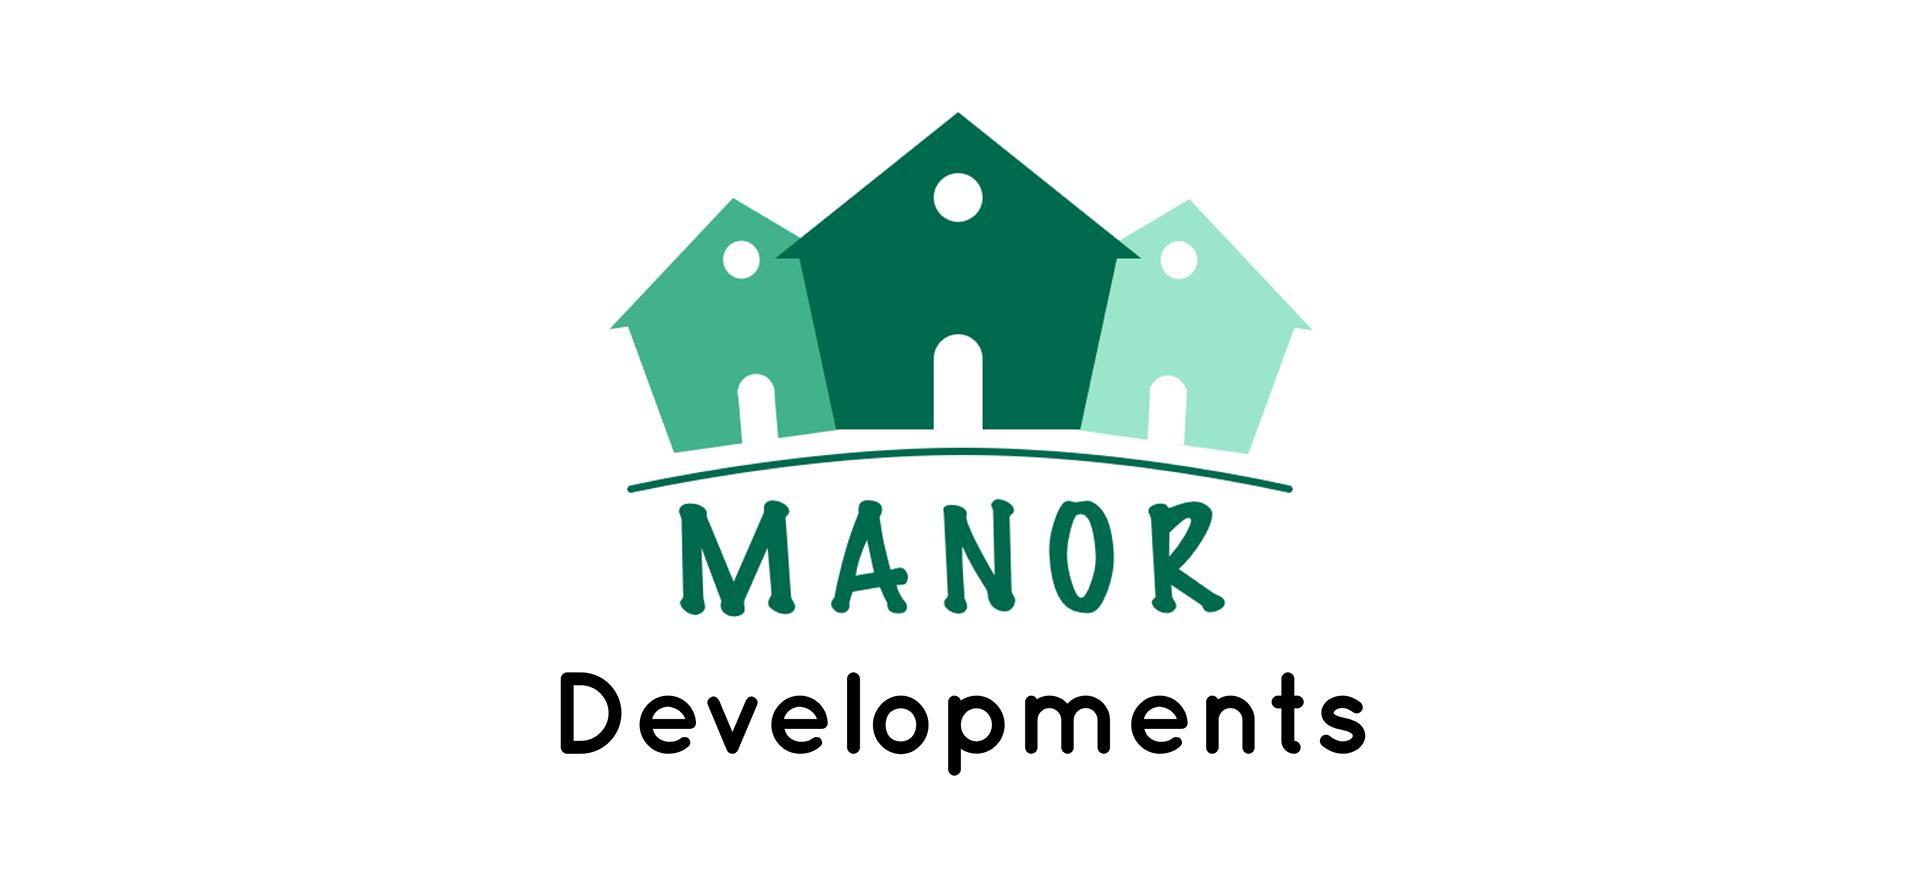 Manor Developments Limited